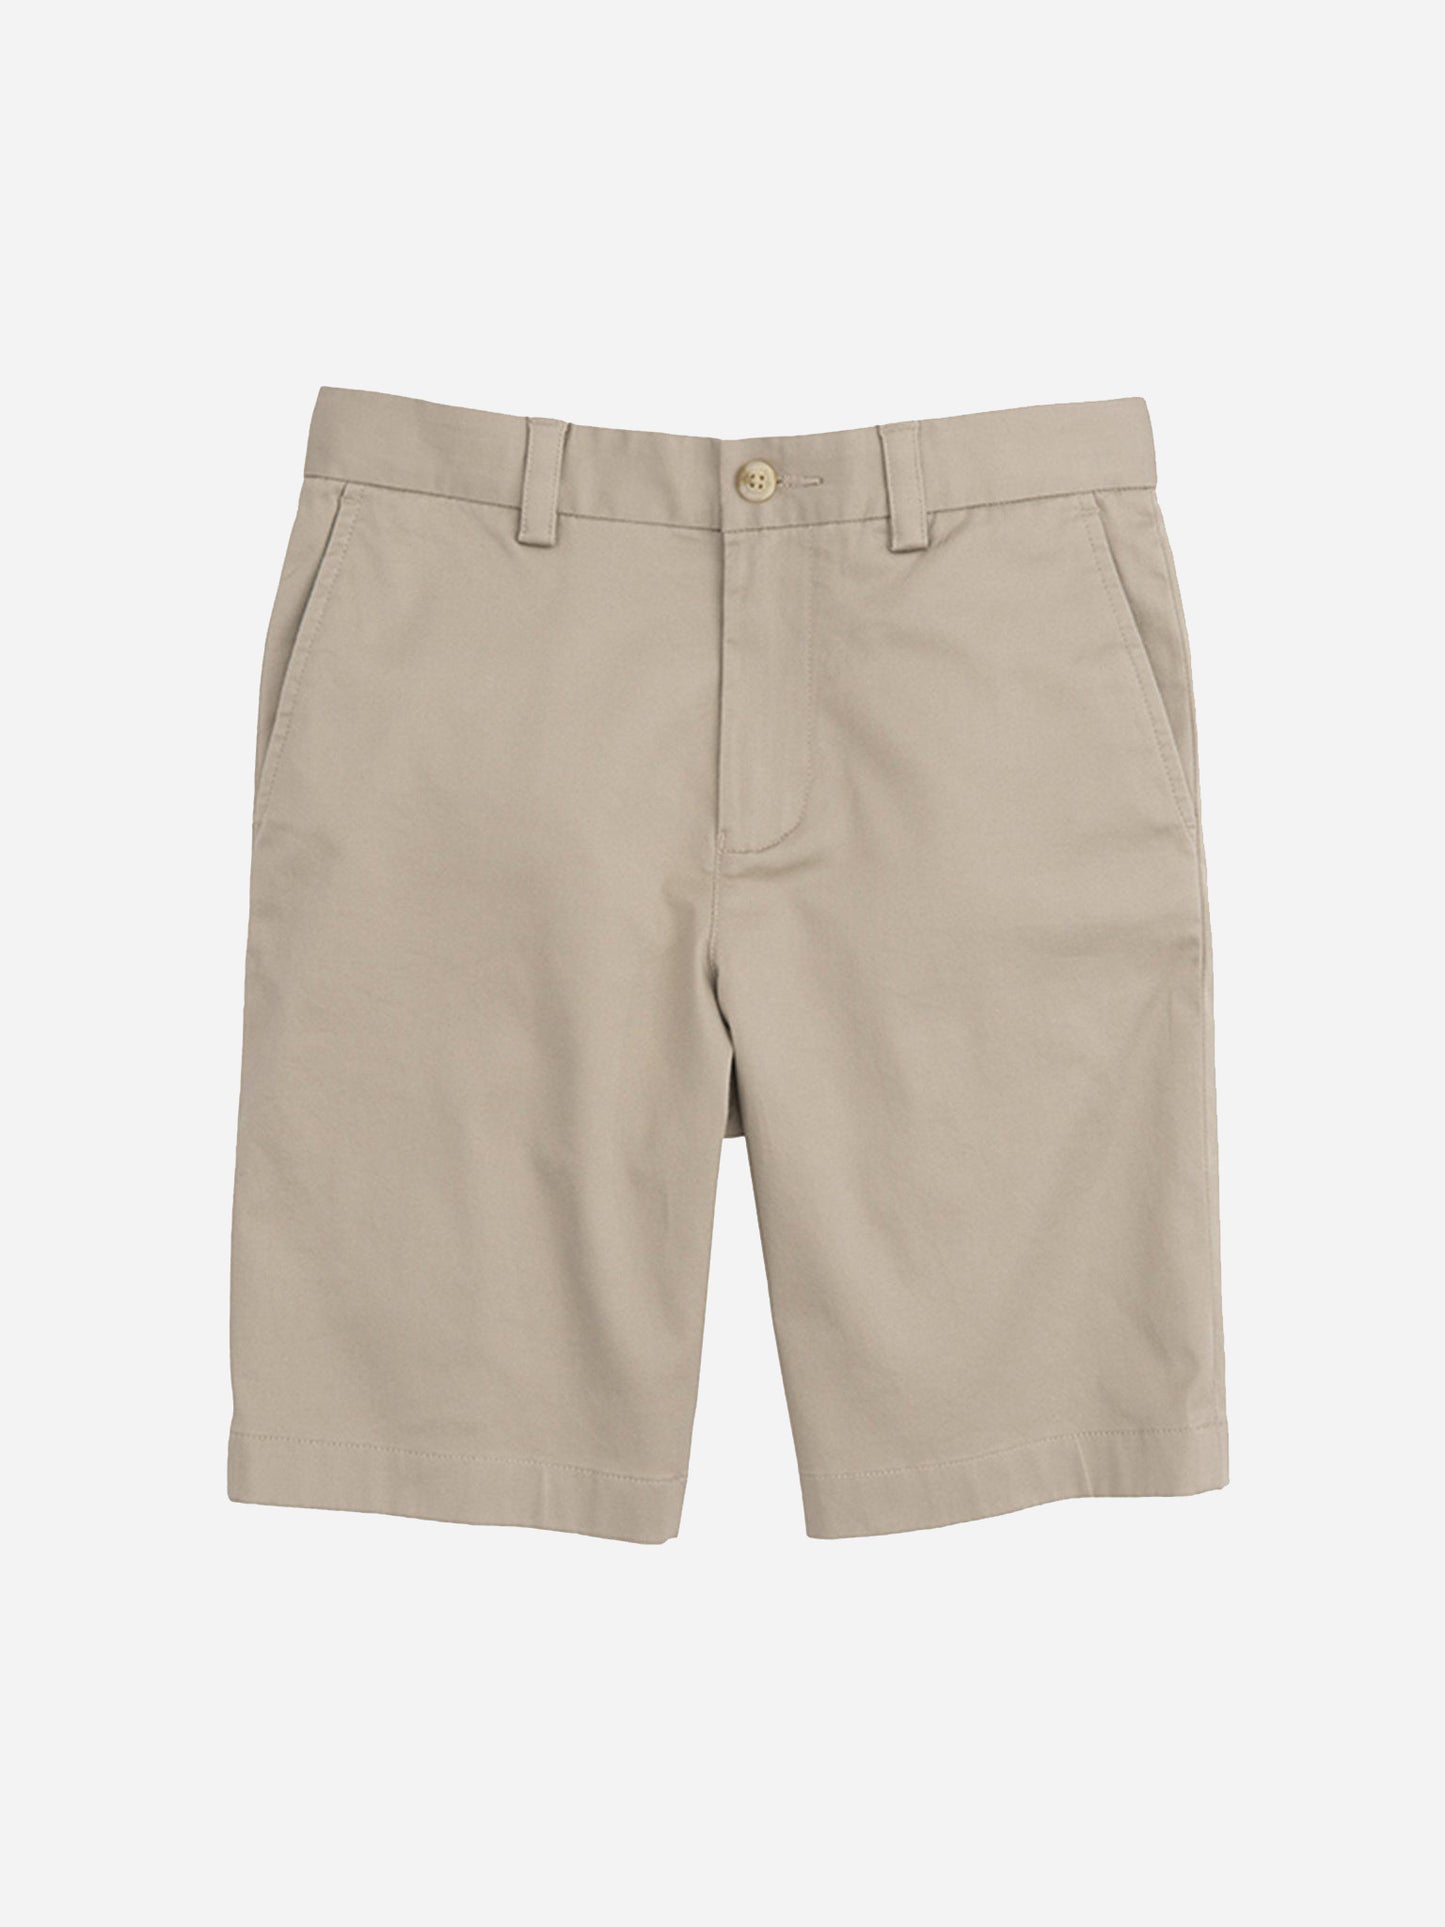 Southern Tide Boys' Channel Marker Shorts